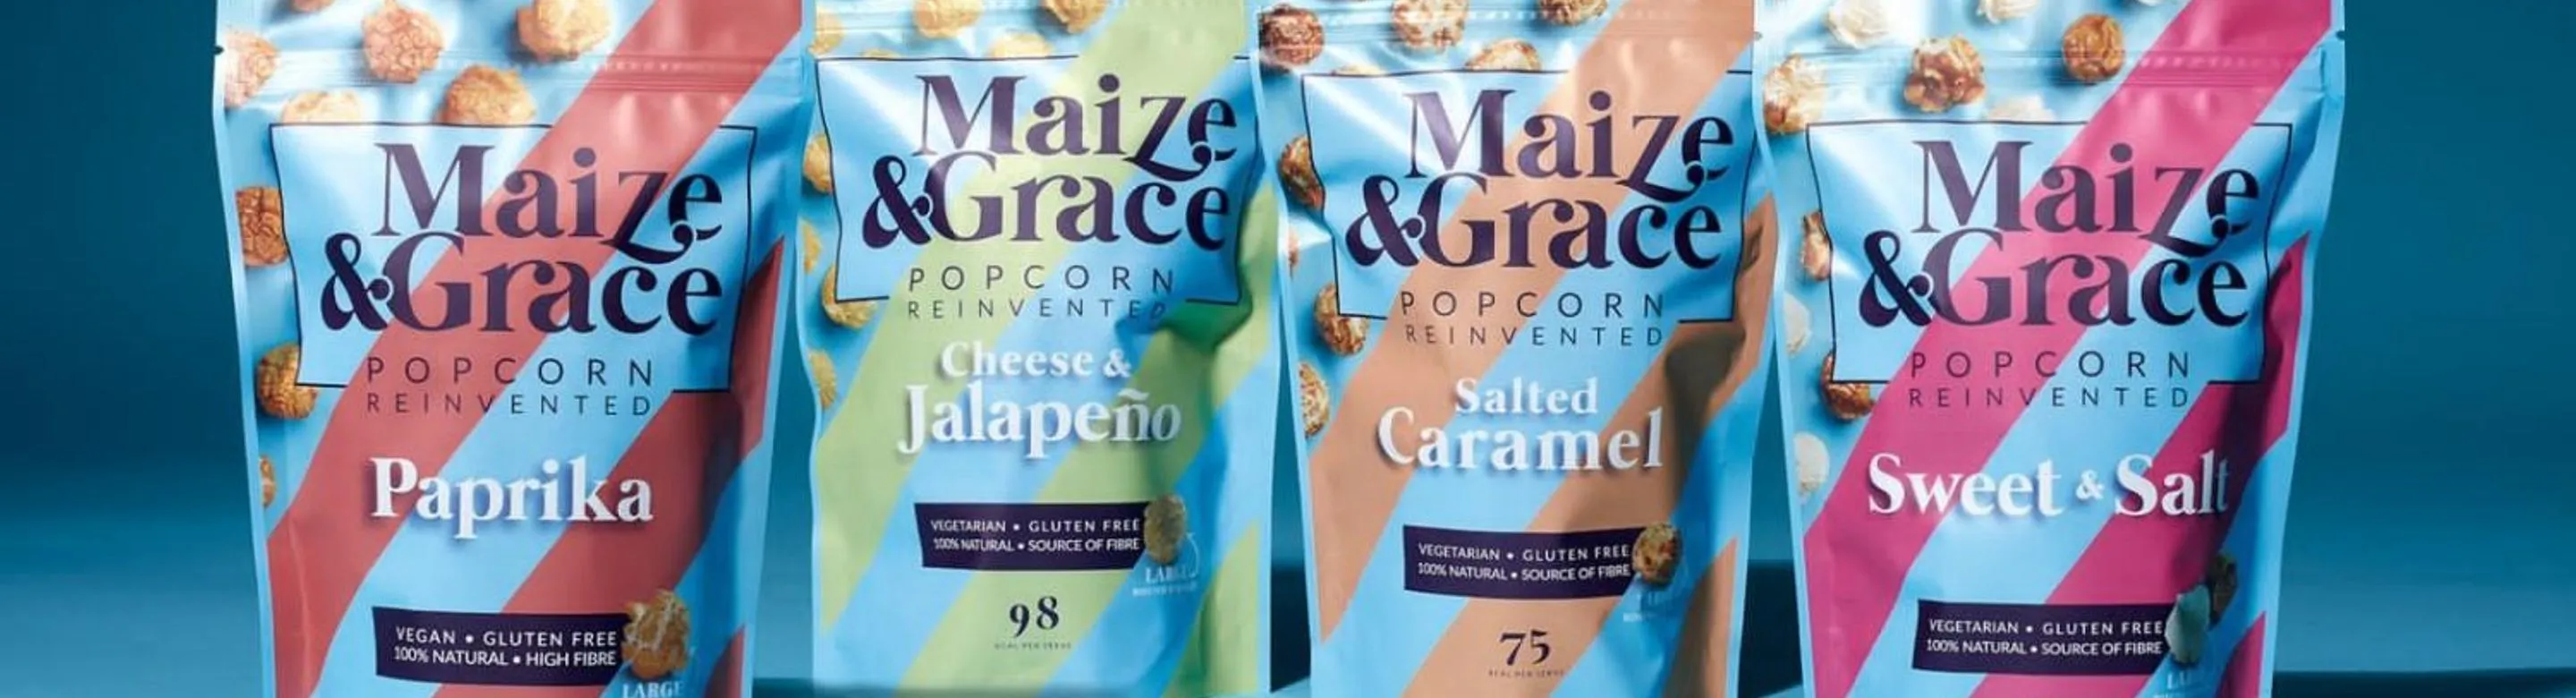 Maize and Grace